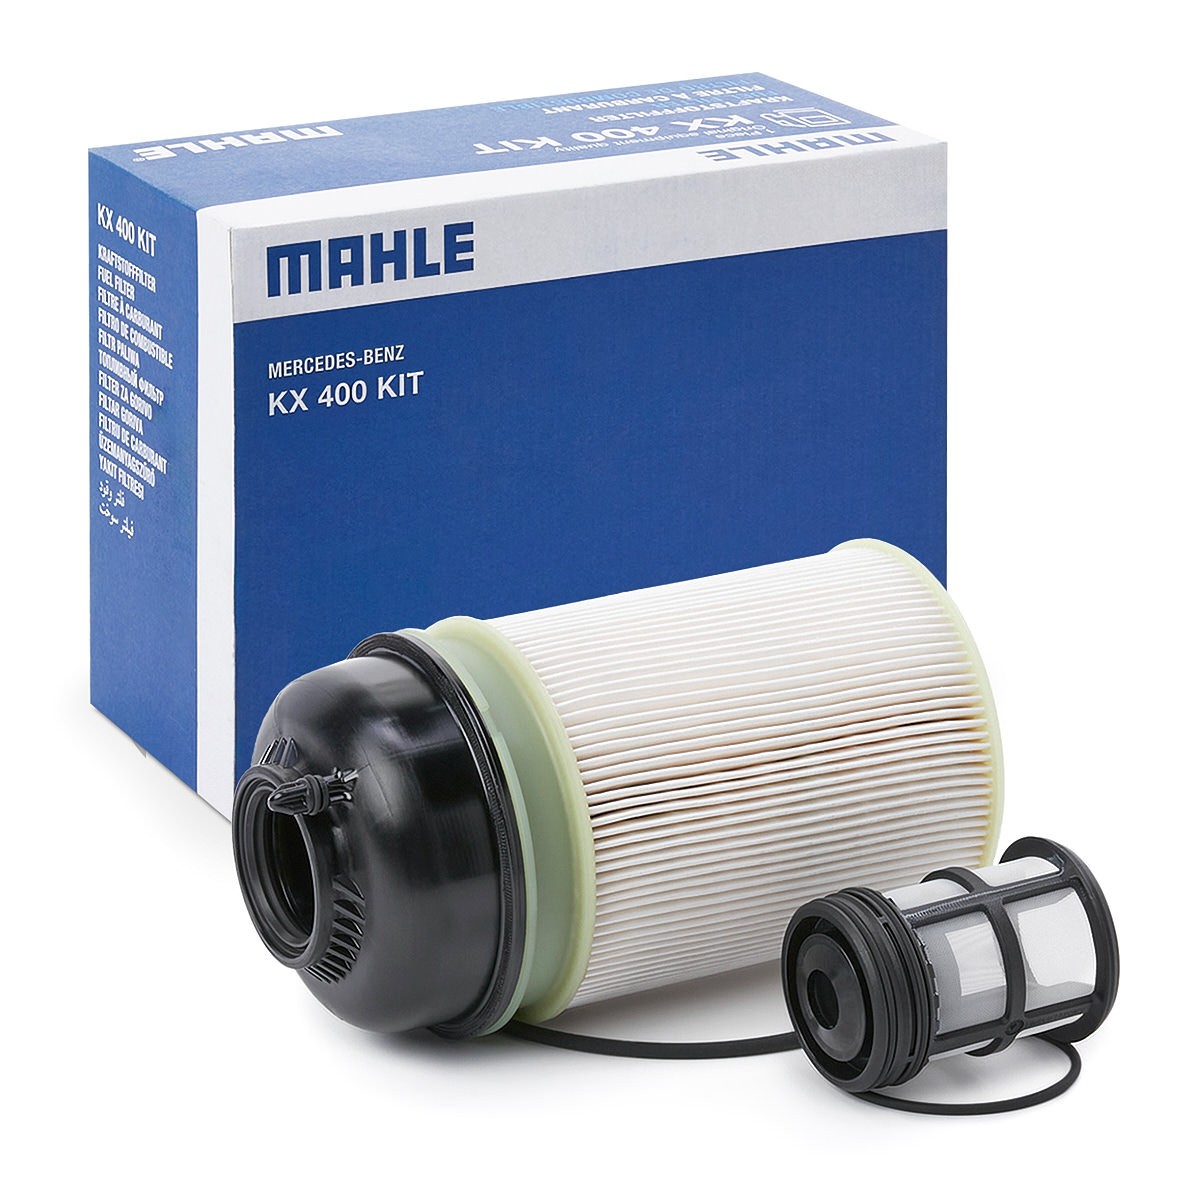 MAHLE ORIGINAL Fuel filter KX 400KIT